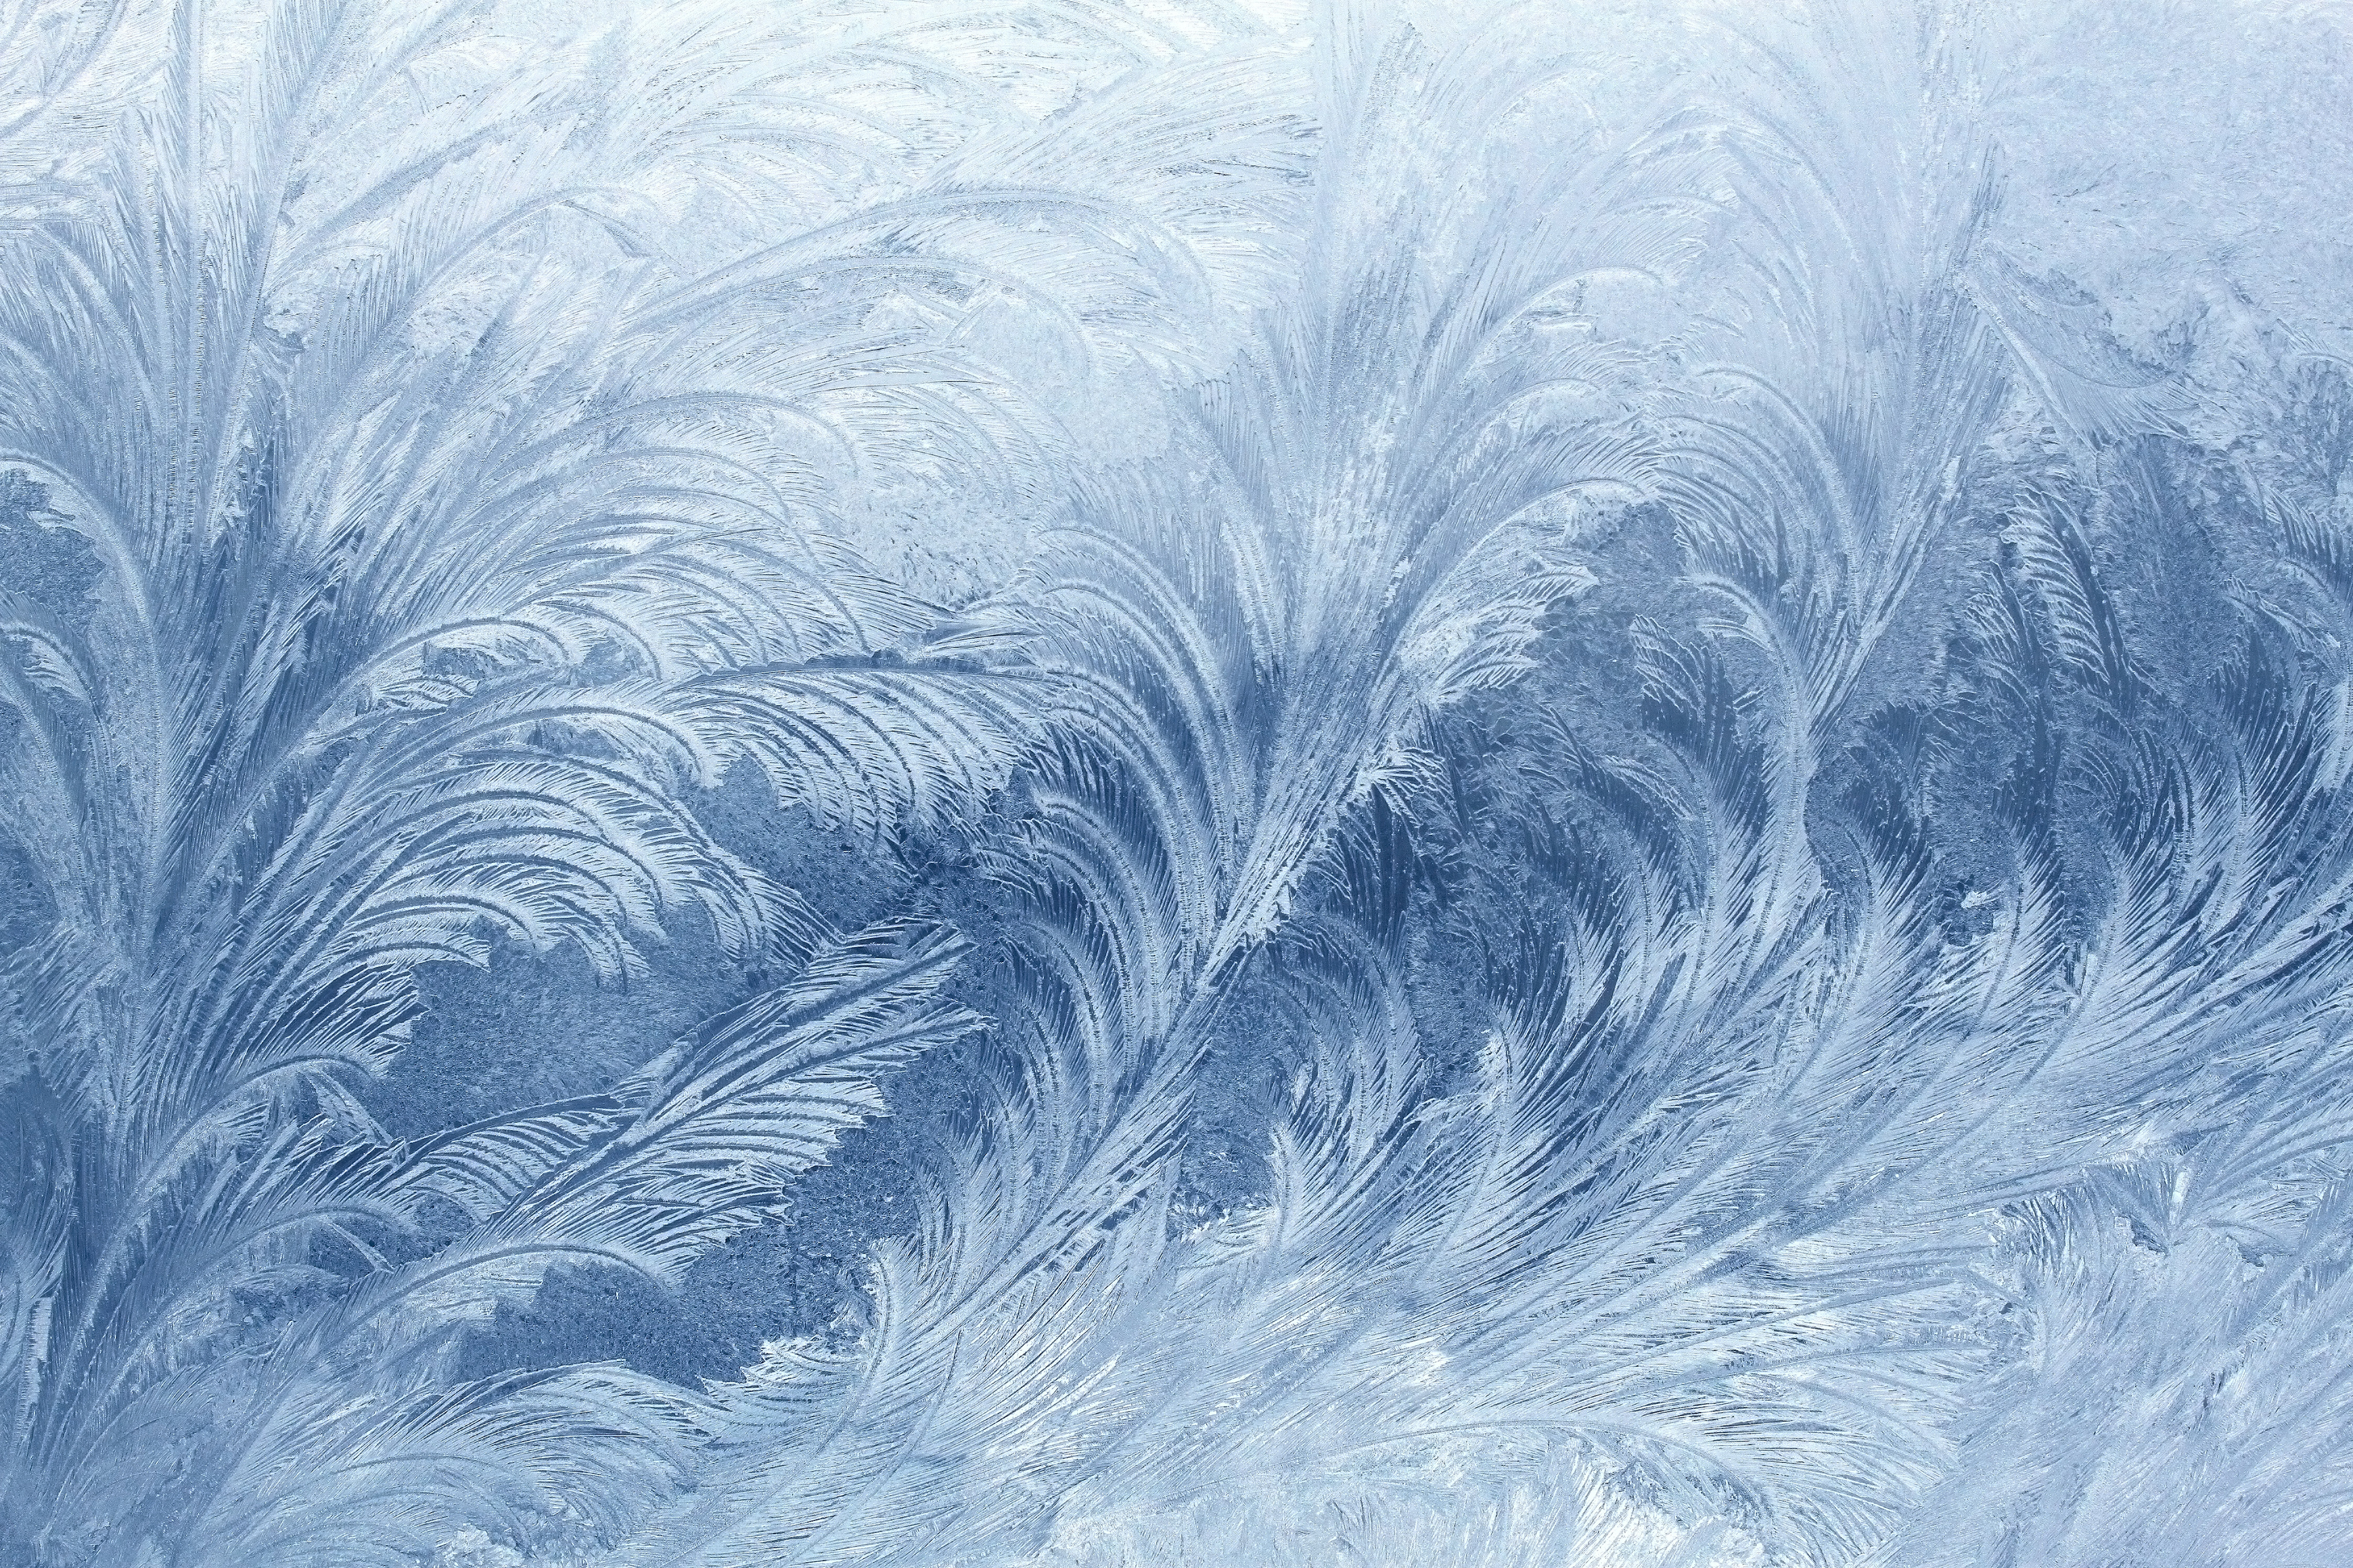  ice patterns winter frost wallpaper 4100x2733 228474 WallpaperUP 4100x2733